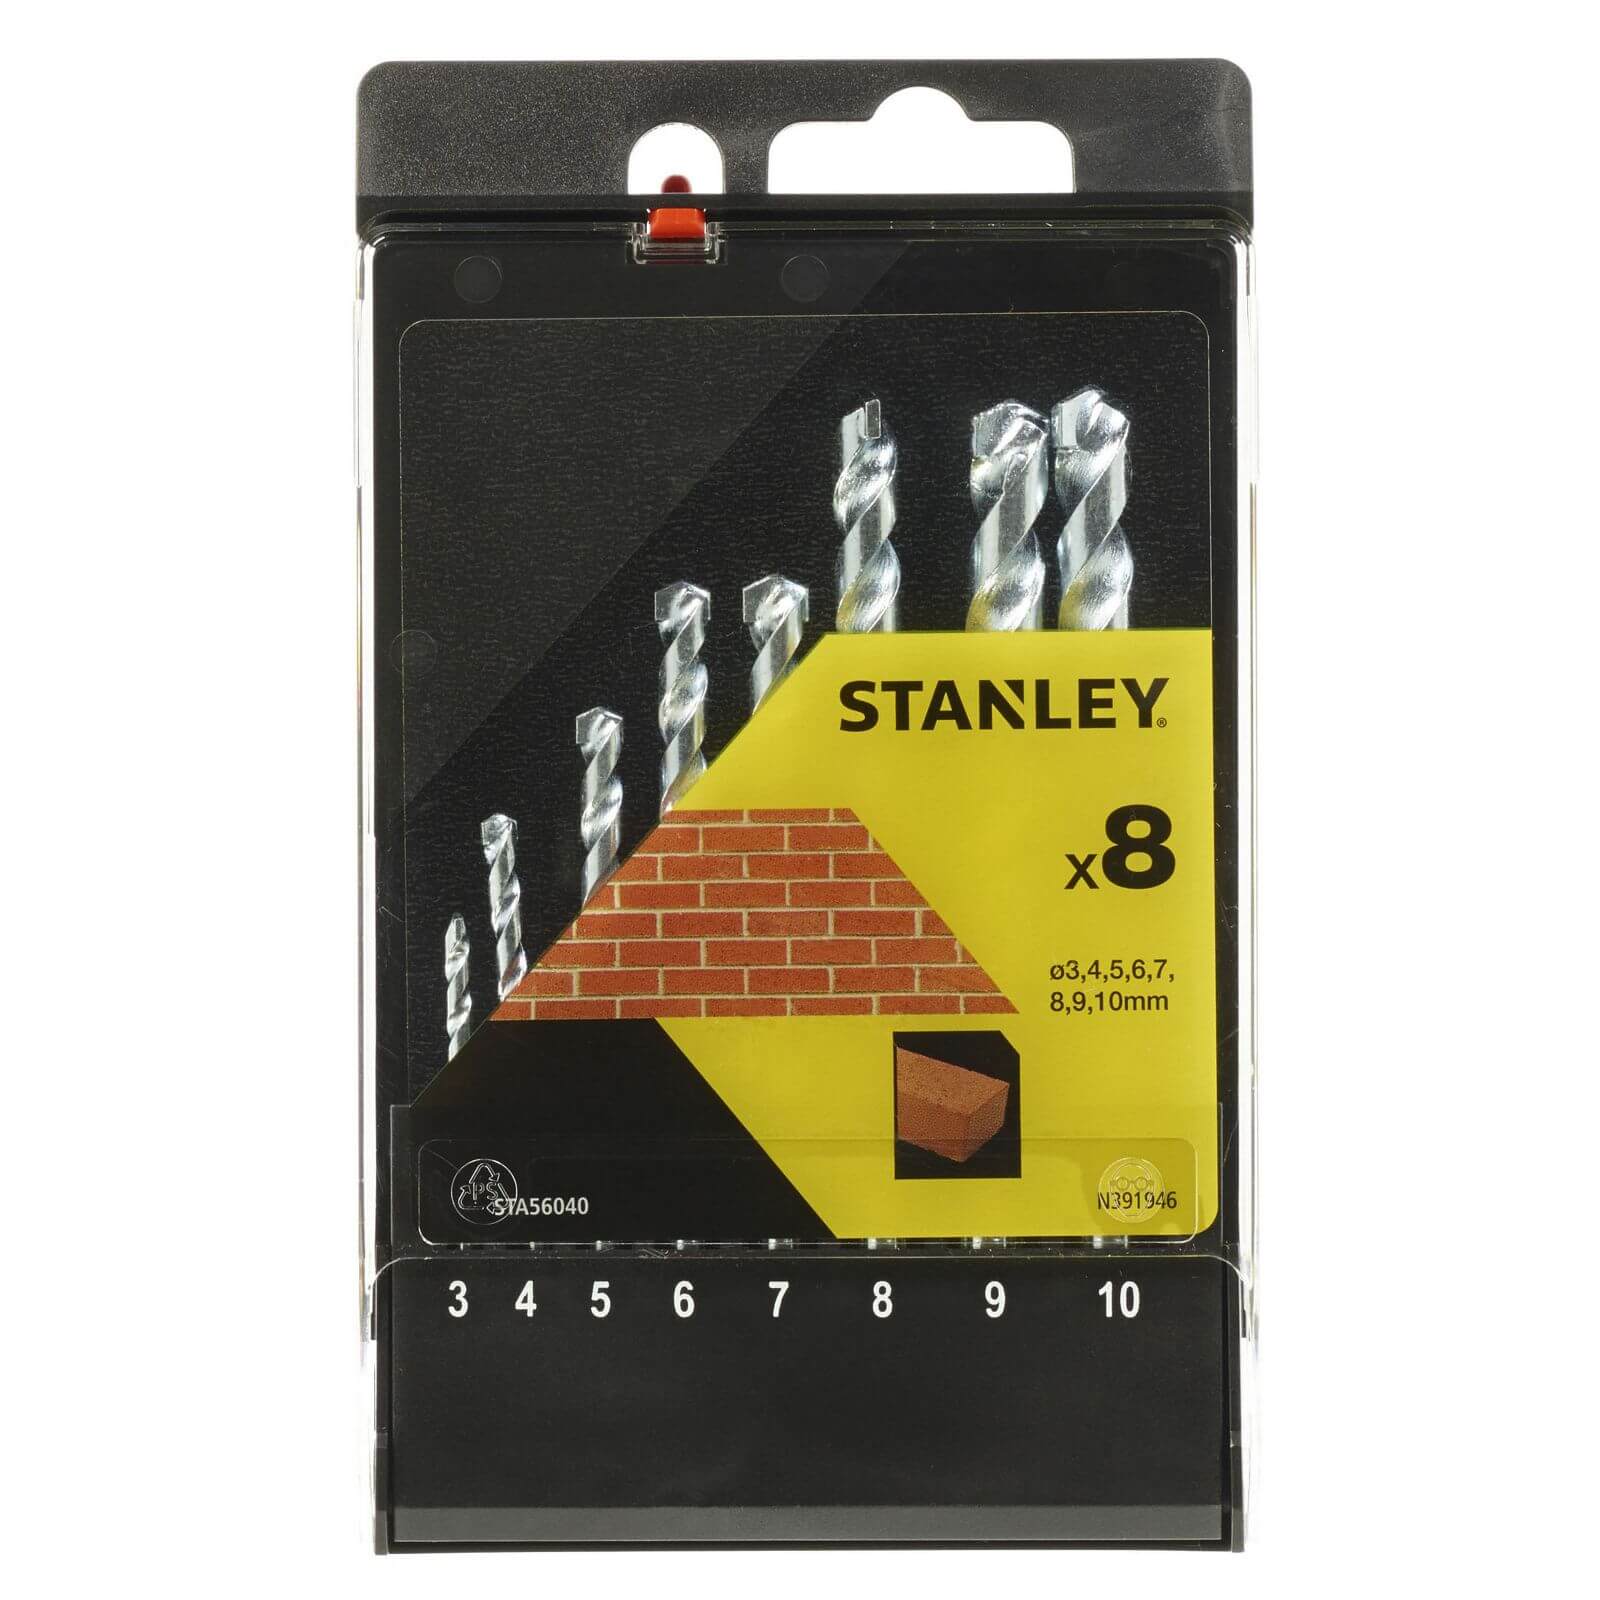 Photo of Stanley 8pc Masonry Drill Bit Set - Sta56040-qz